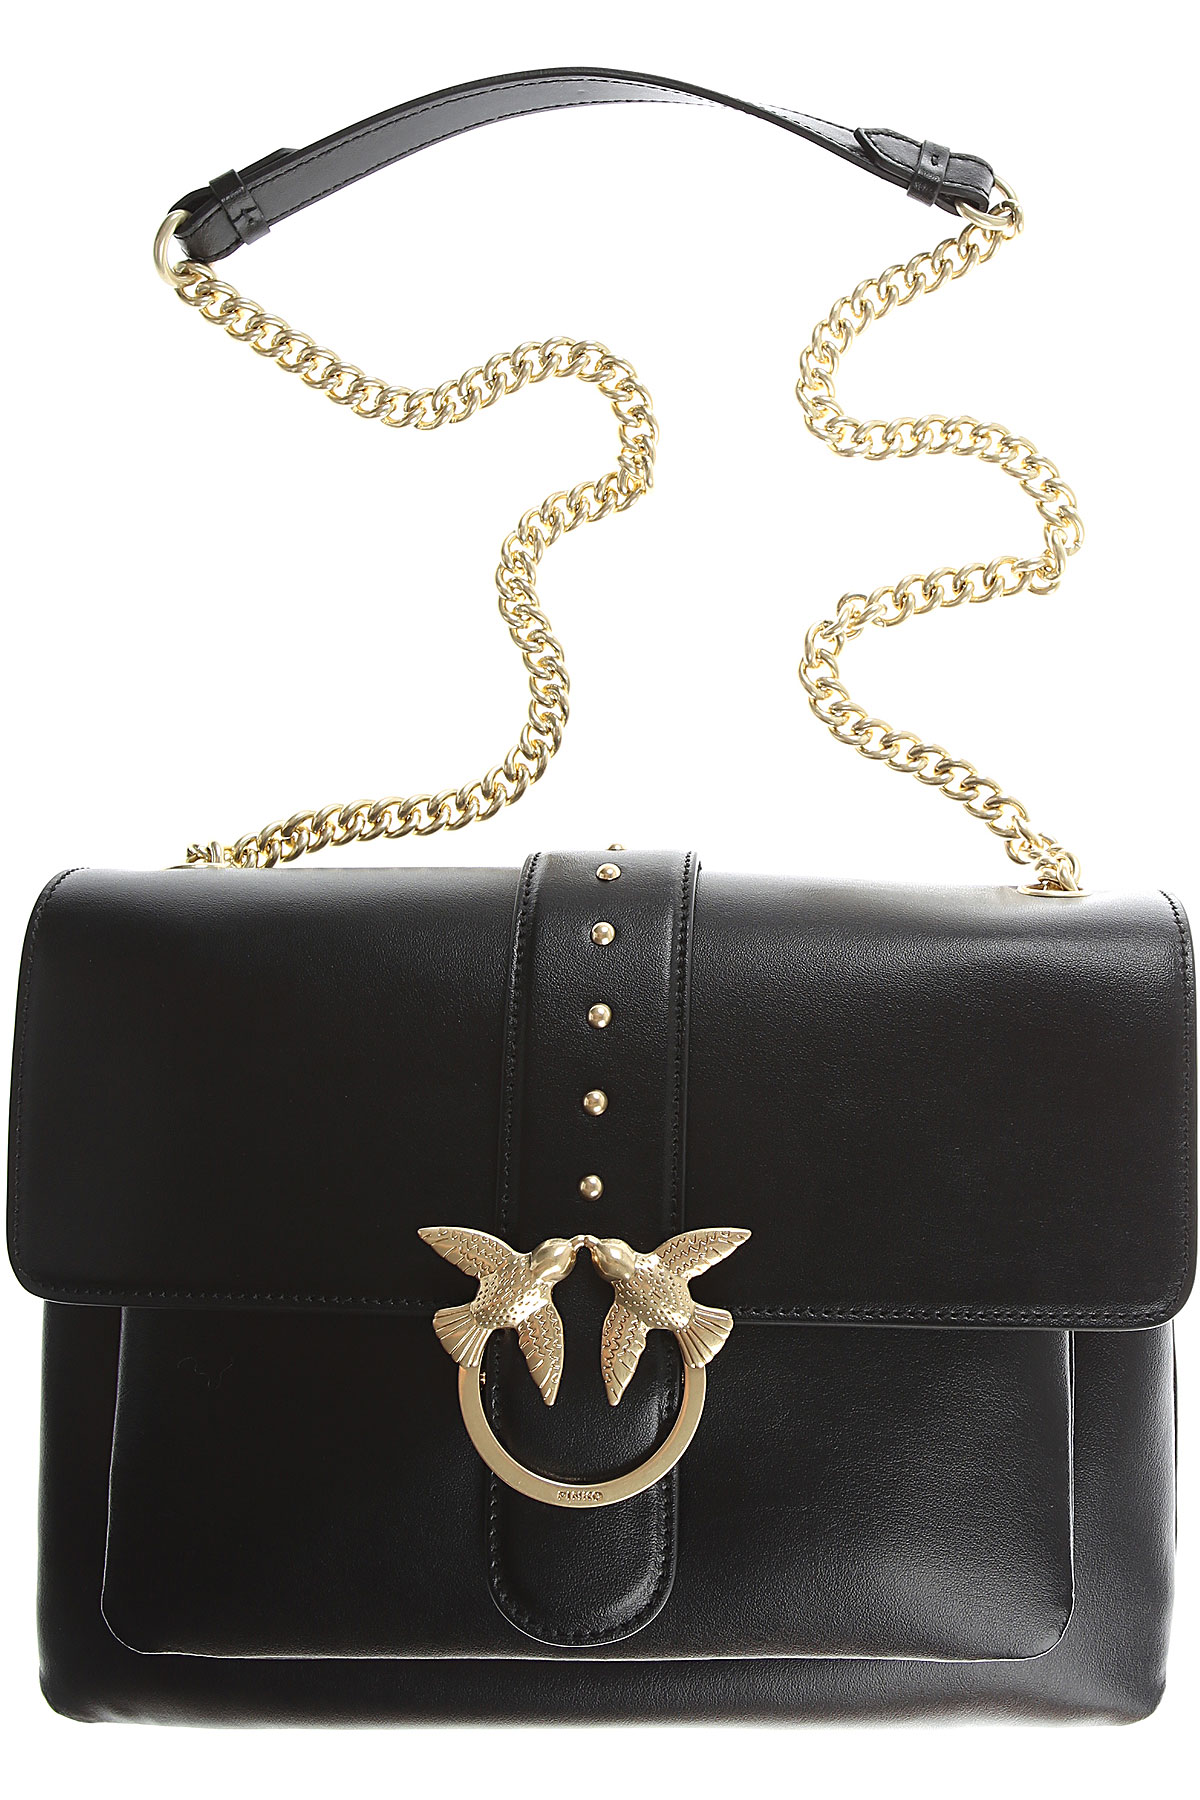 Handbags Pinko, Style code: 1p21ehy5ff-z99-bigloveA549